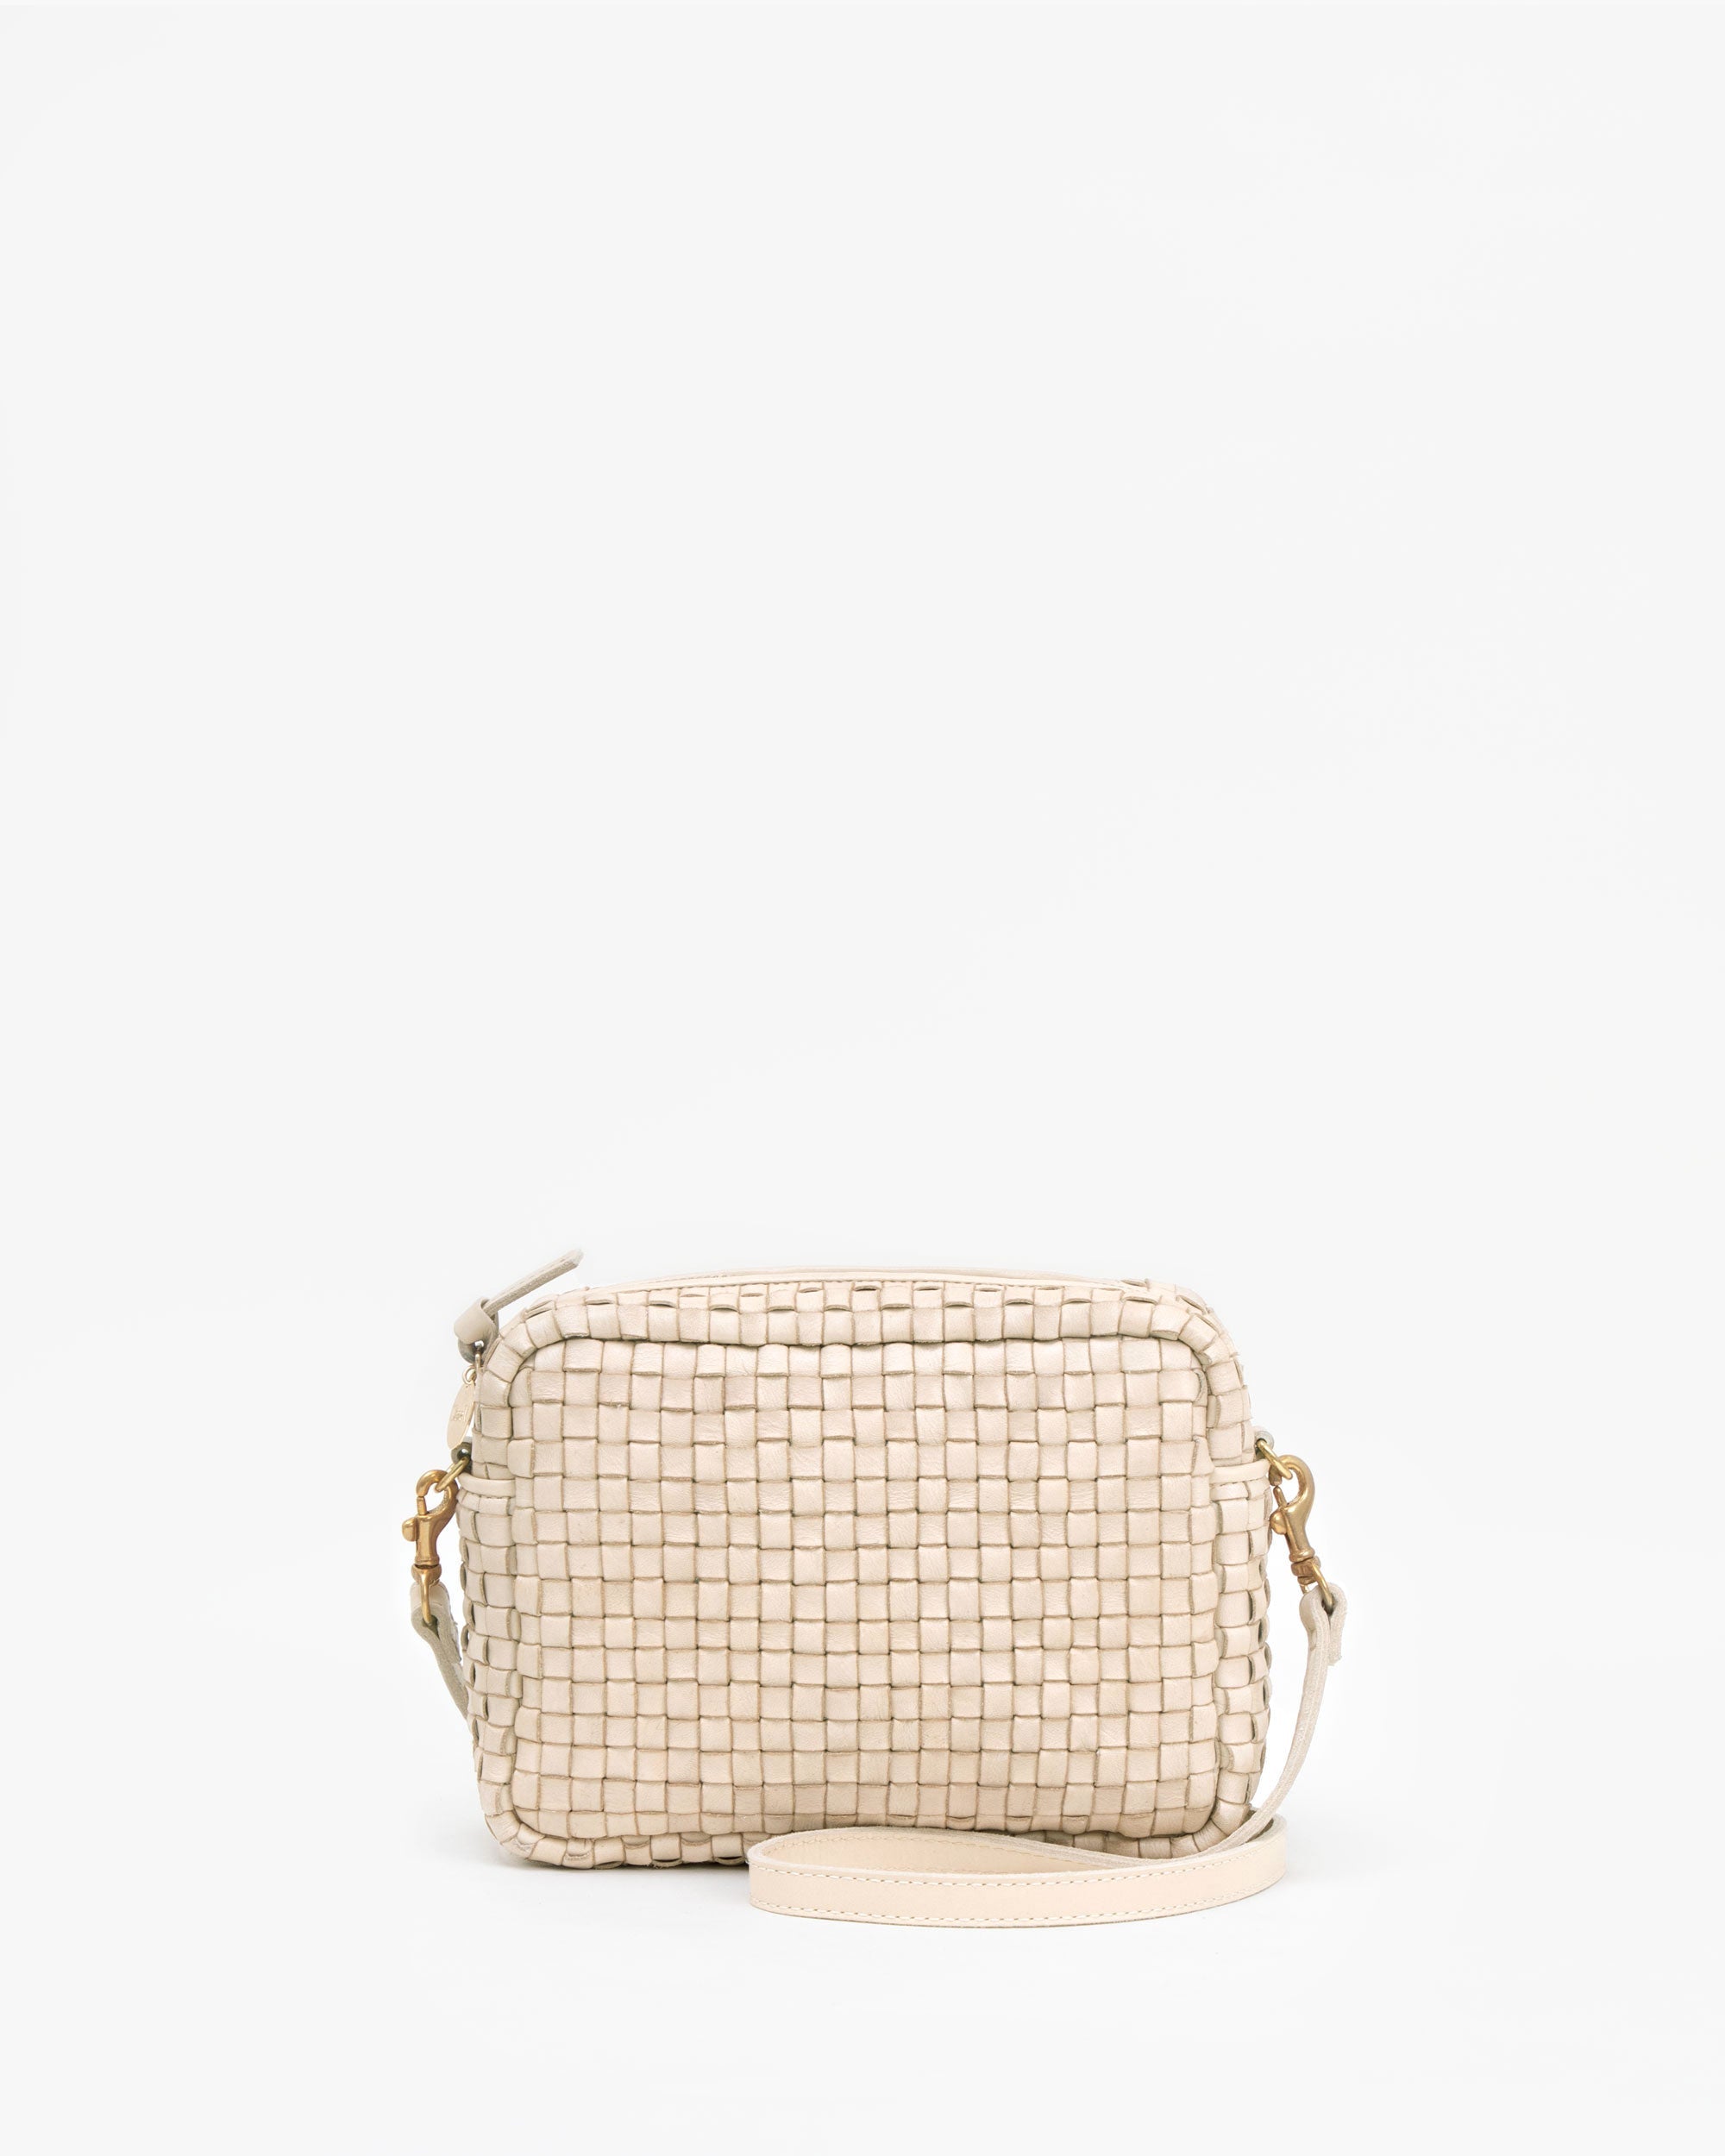 Nanette Lepore Vegan Leather Cream Colored Handbag Floral Gold Accent Purse  | eBay